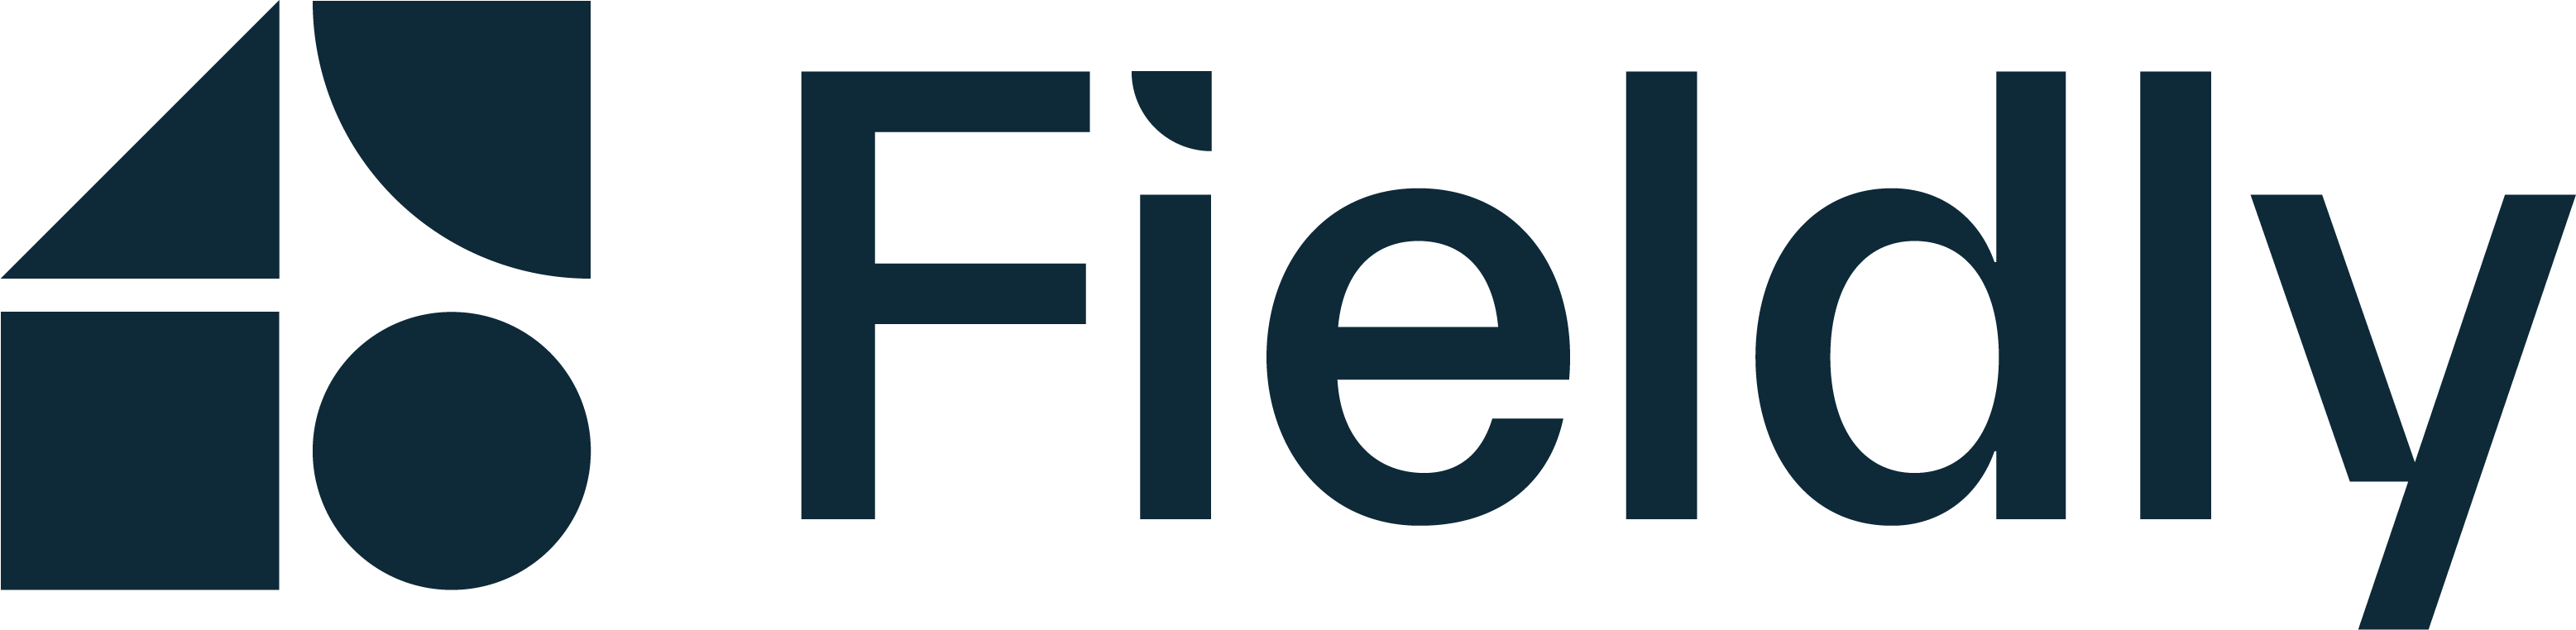 fieldly logo black